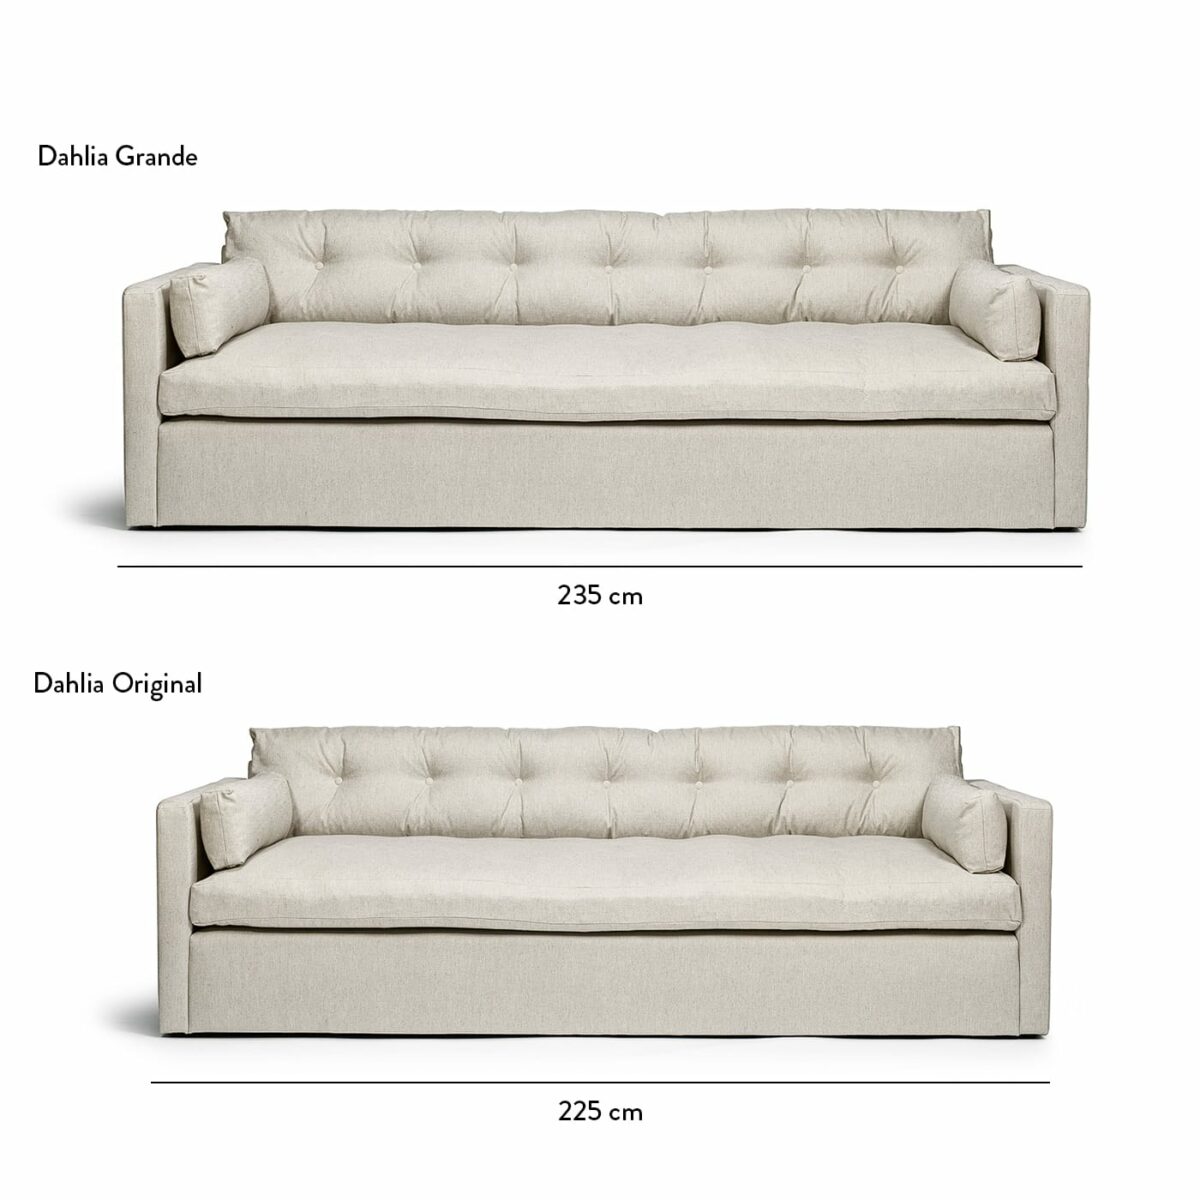 Dahlia Grande 3-Seat Sofa Stripe